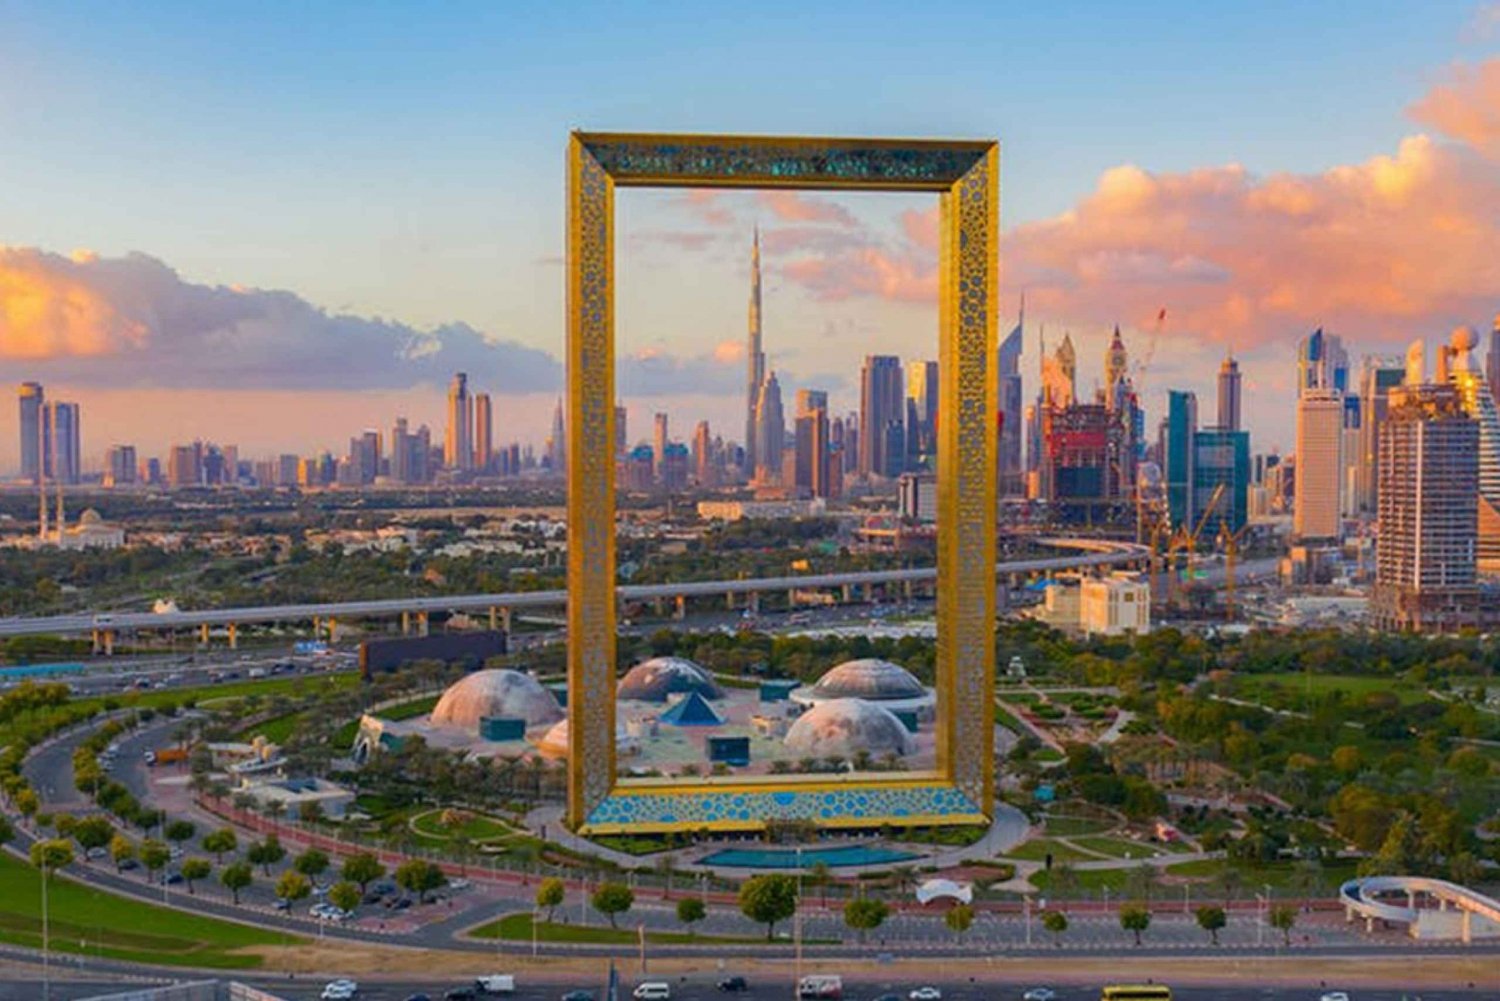 Dubai: privérondleiding door de stad en toegangsticket voor Dubai Frame